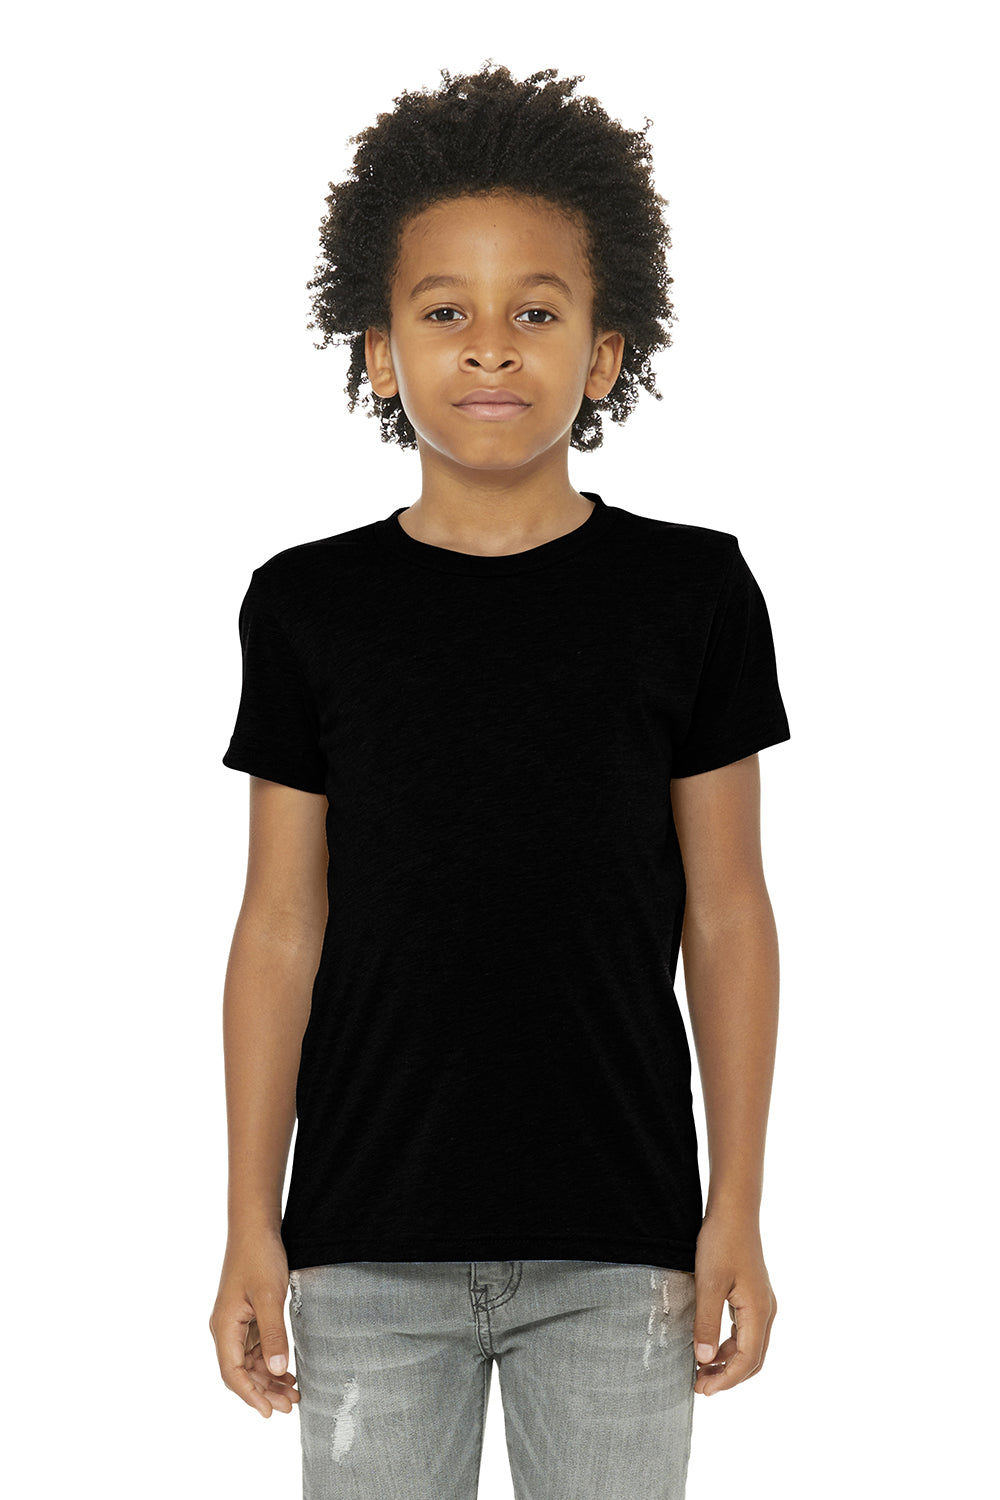 Bella + Canvas 3413Y Youth Short Sleeve Crewneck T-Shirt Solid Black Model Front